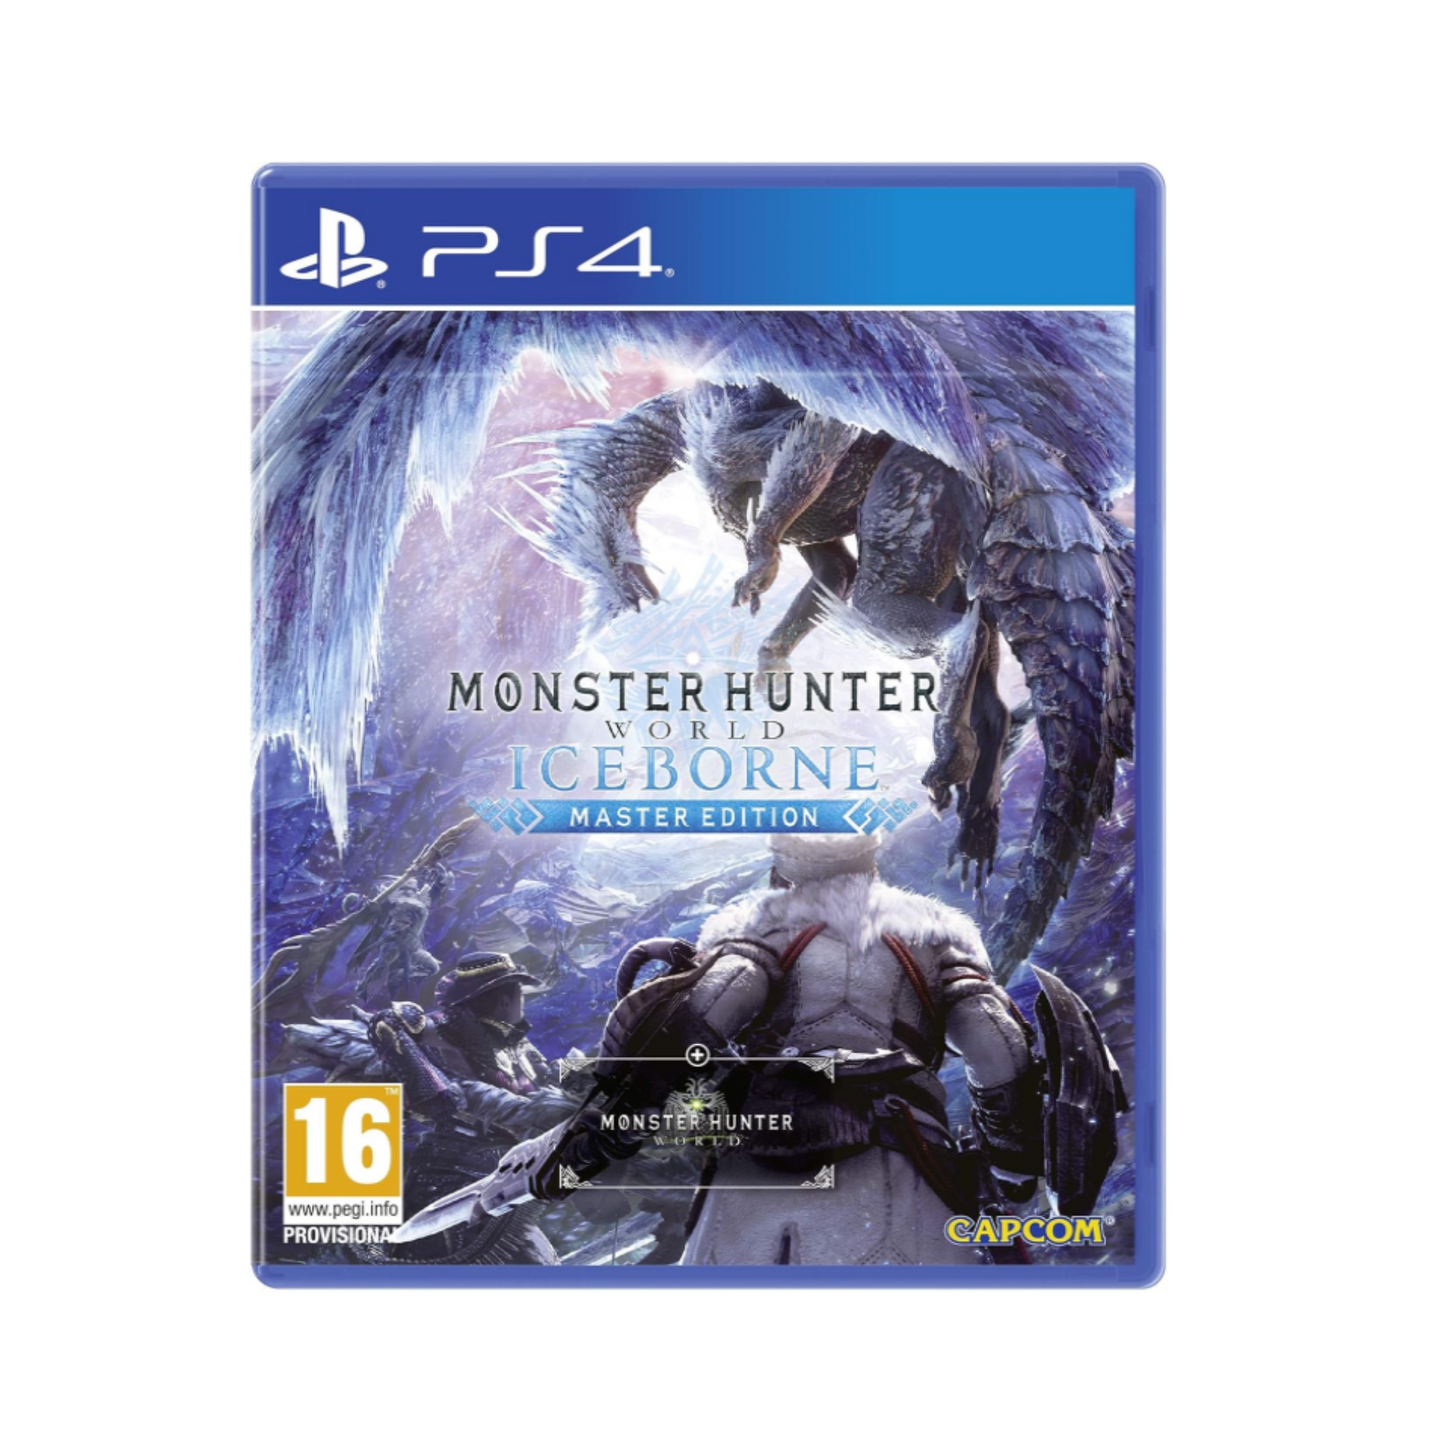 Monster Hunter World Iceborne Video Game for Playstation 4